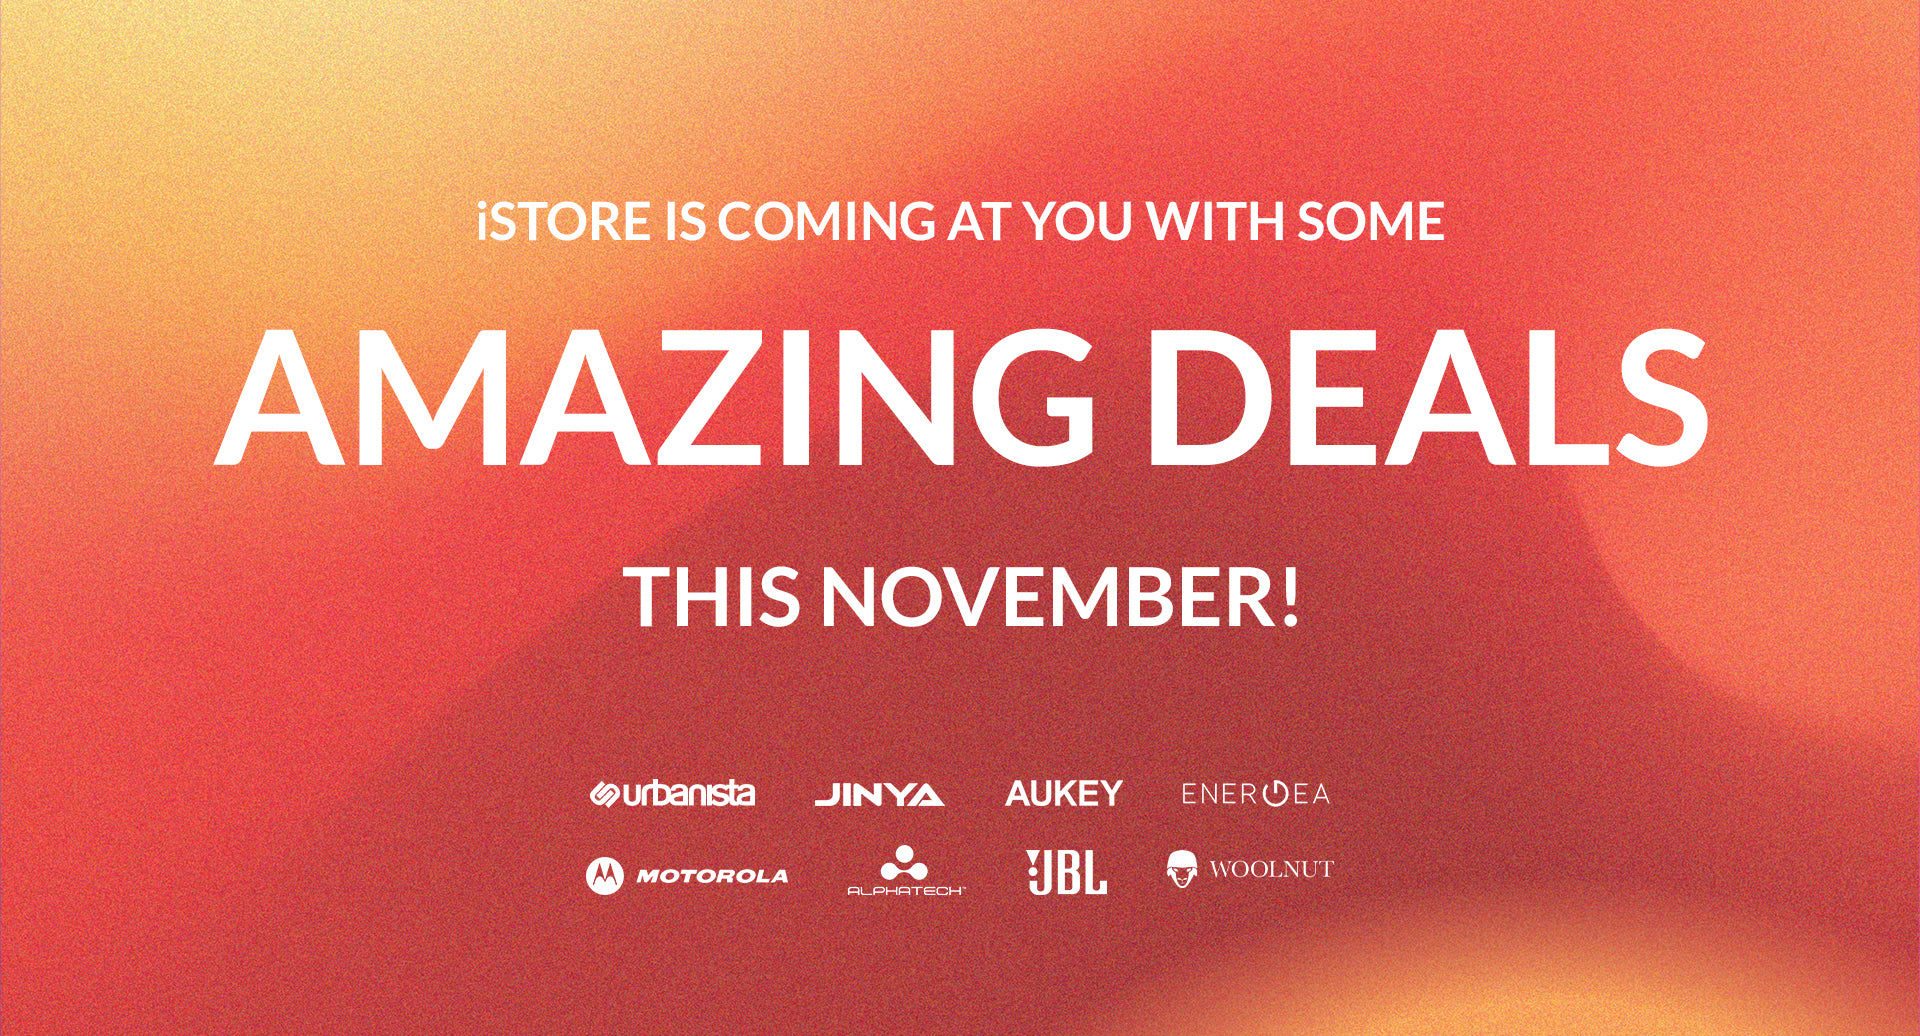 Amazing deals this November!